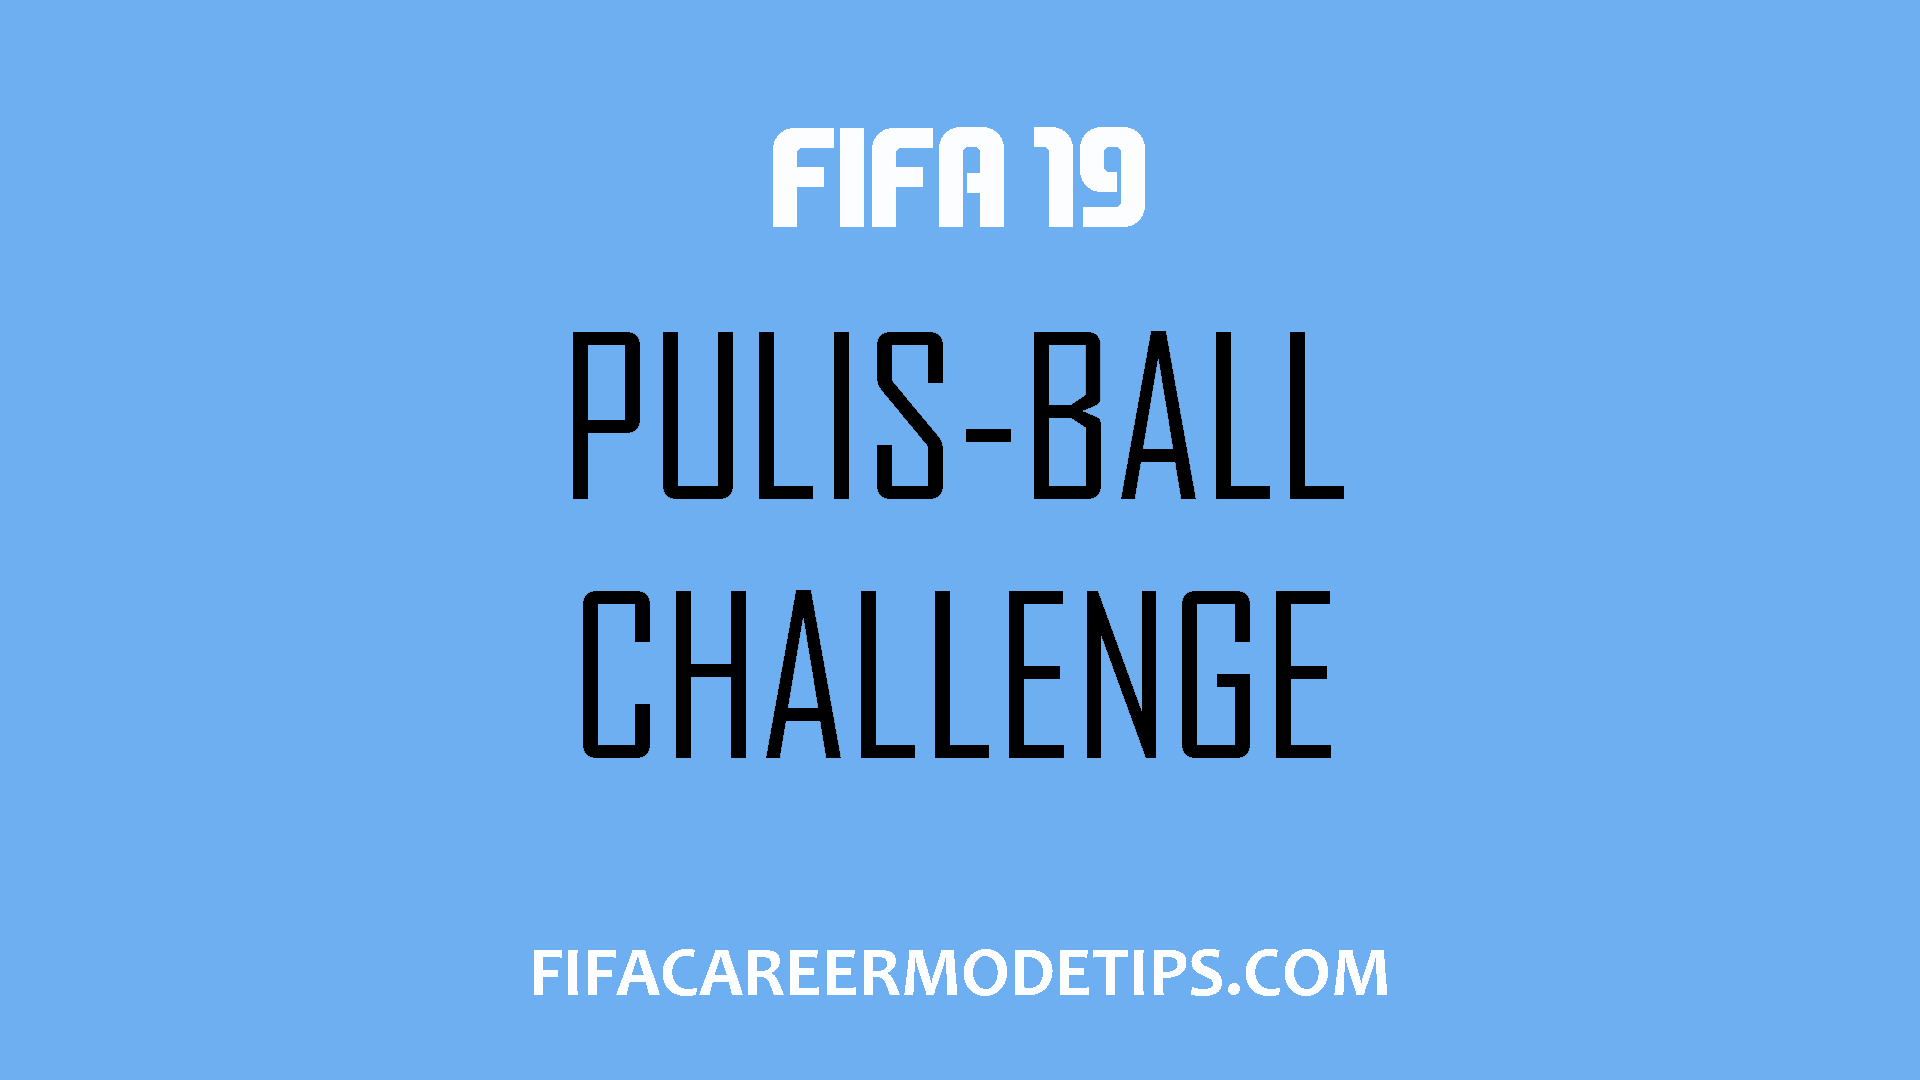 FIFA Pulis-Ball Challenge